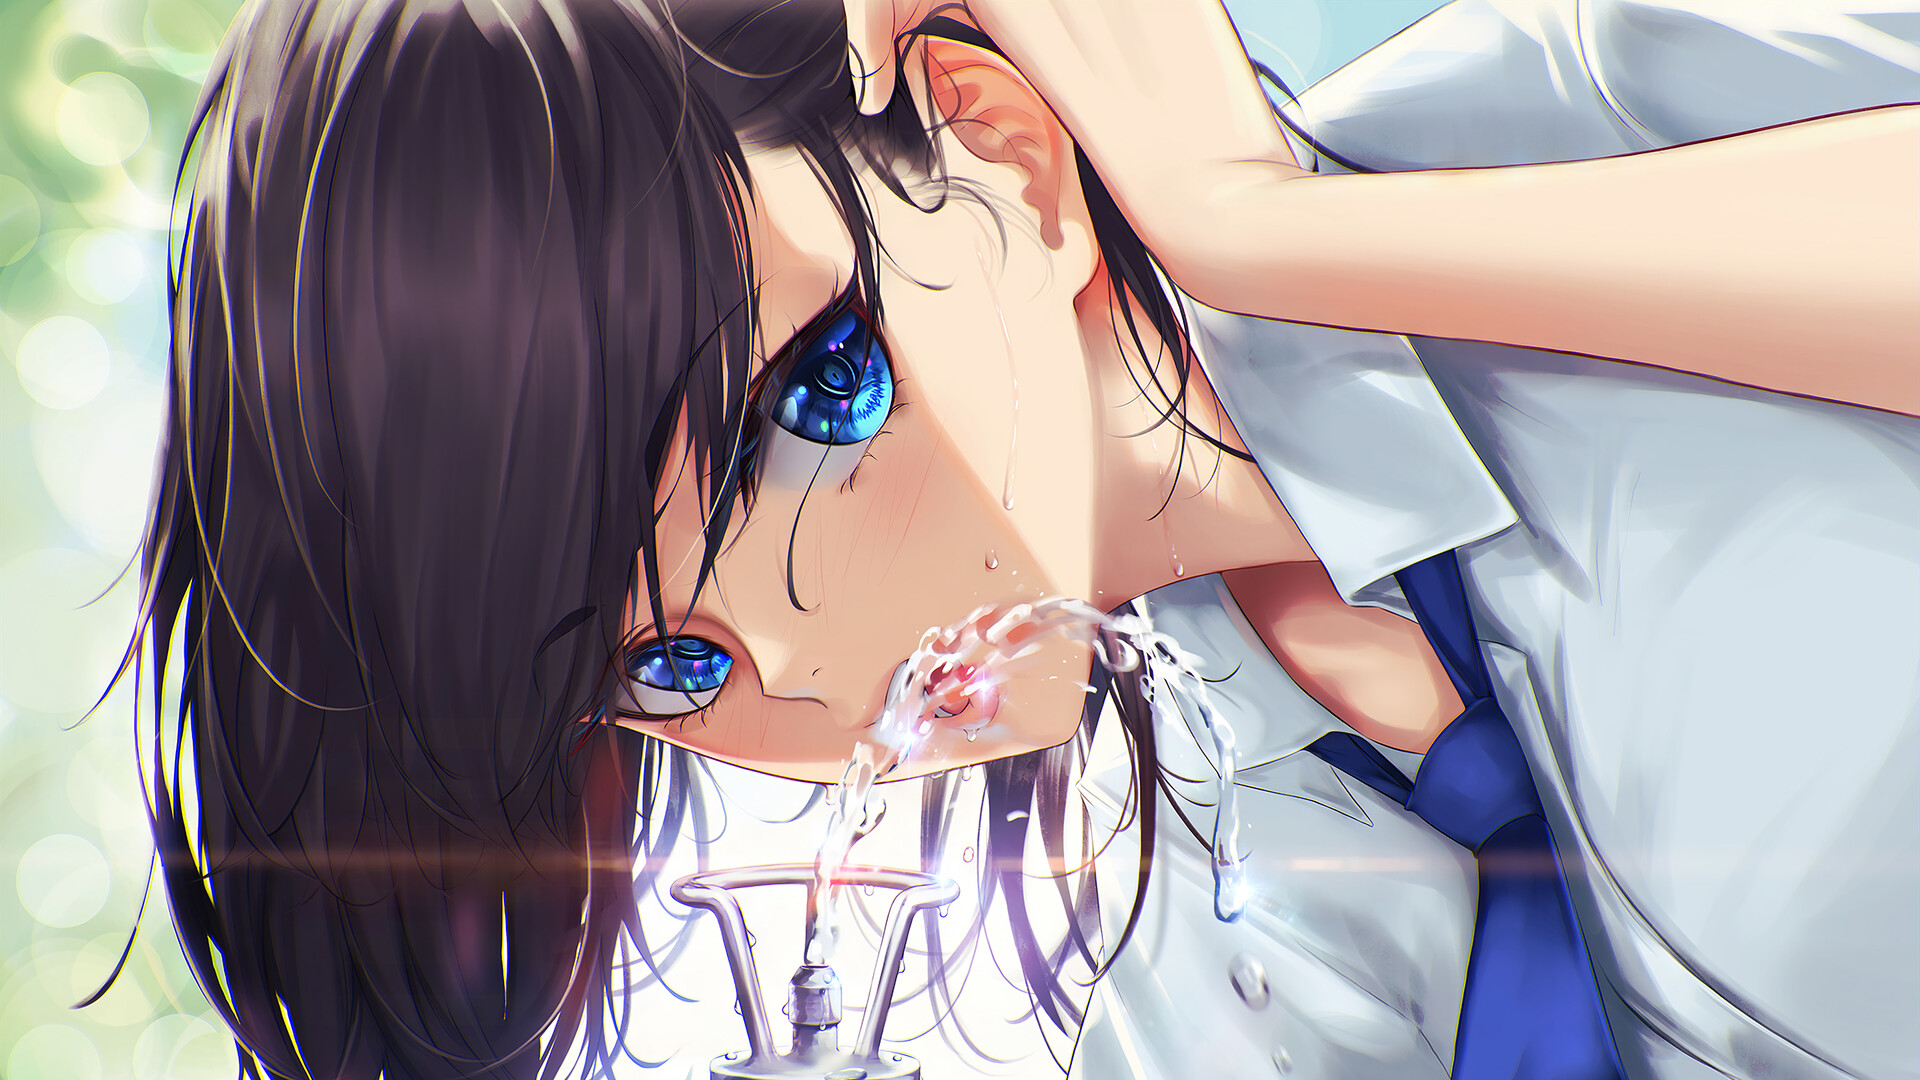 Anime Girls Blue Eyes Dark Hair Drinking Water Drinking Fountains White Shirt Blue Tie Face Looking  1920x1080